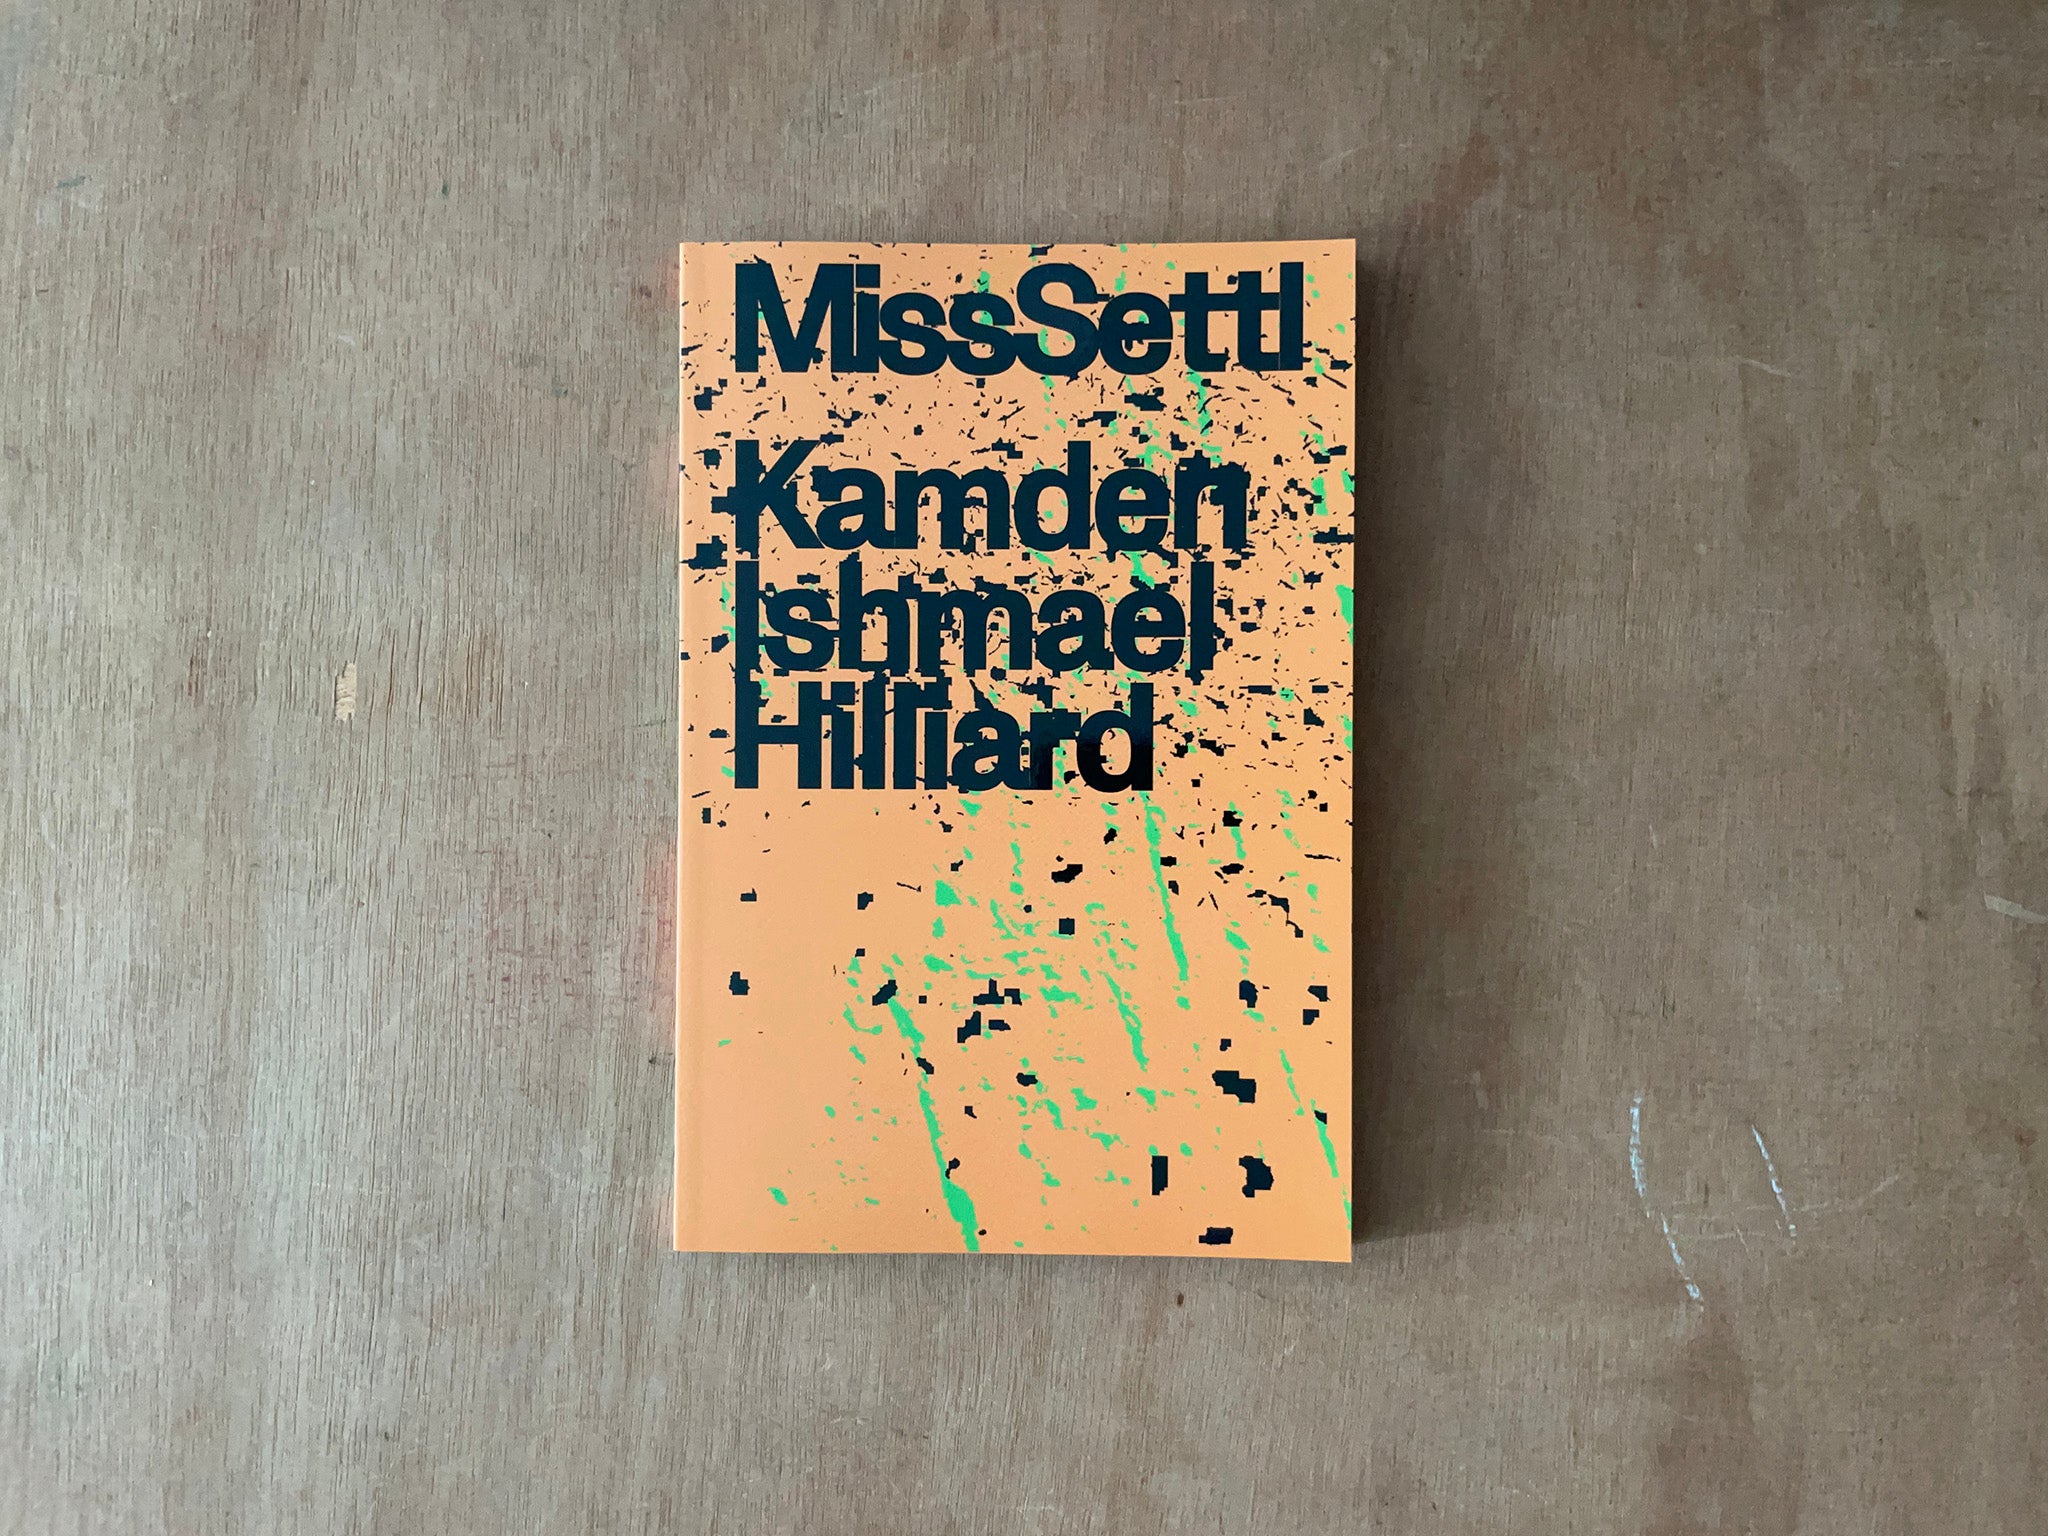 MISSSETTL by Kamden Ishmael Hilliard